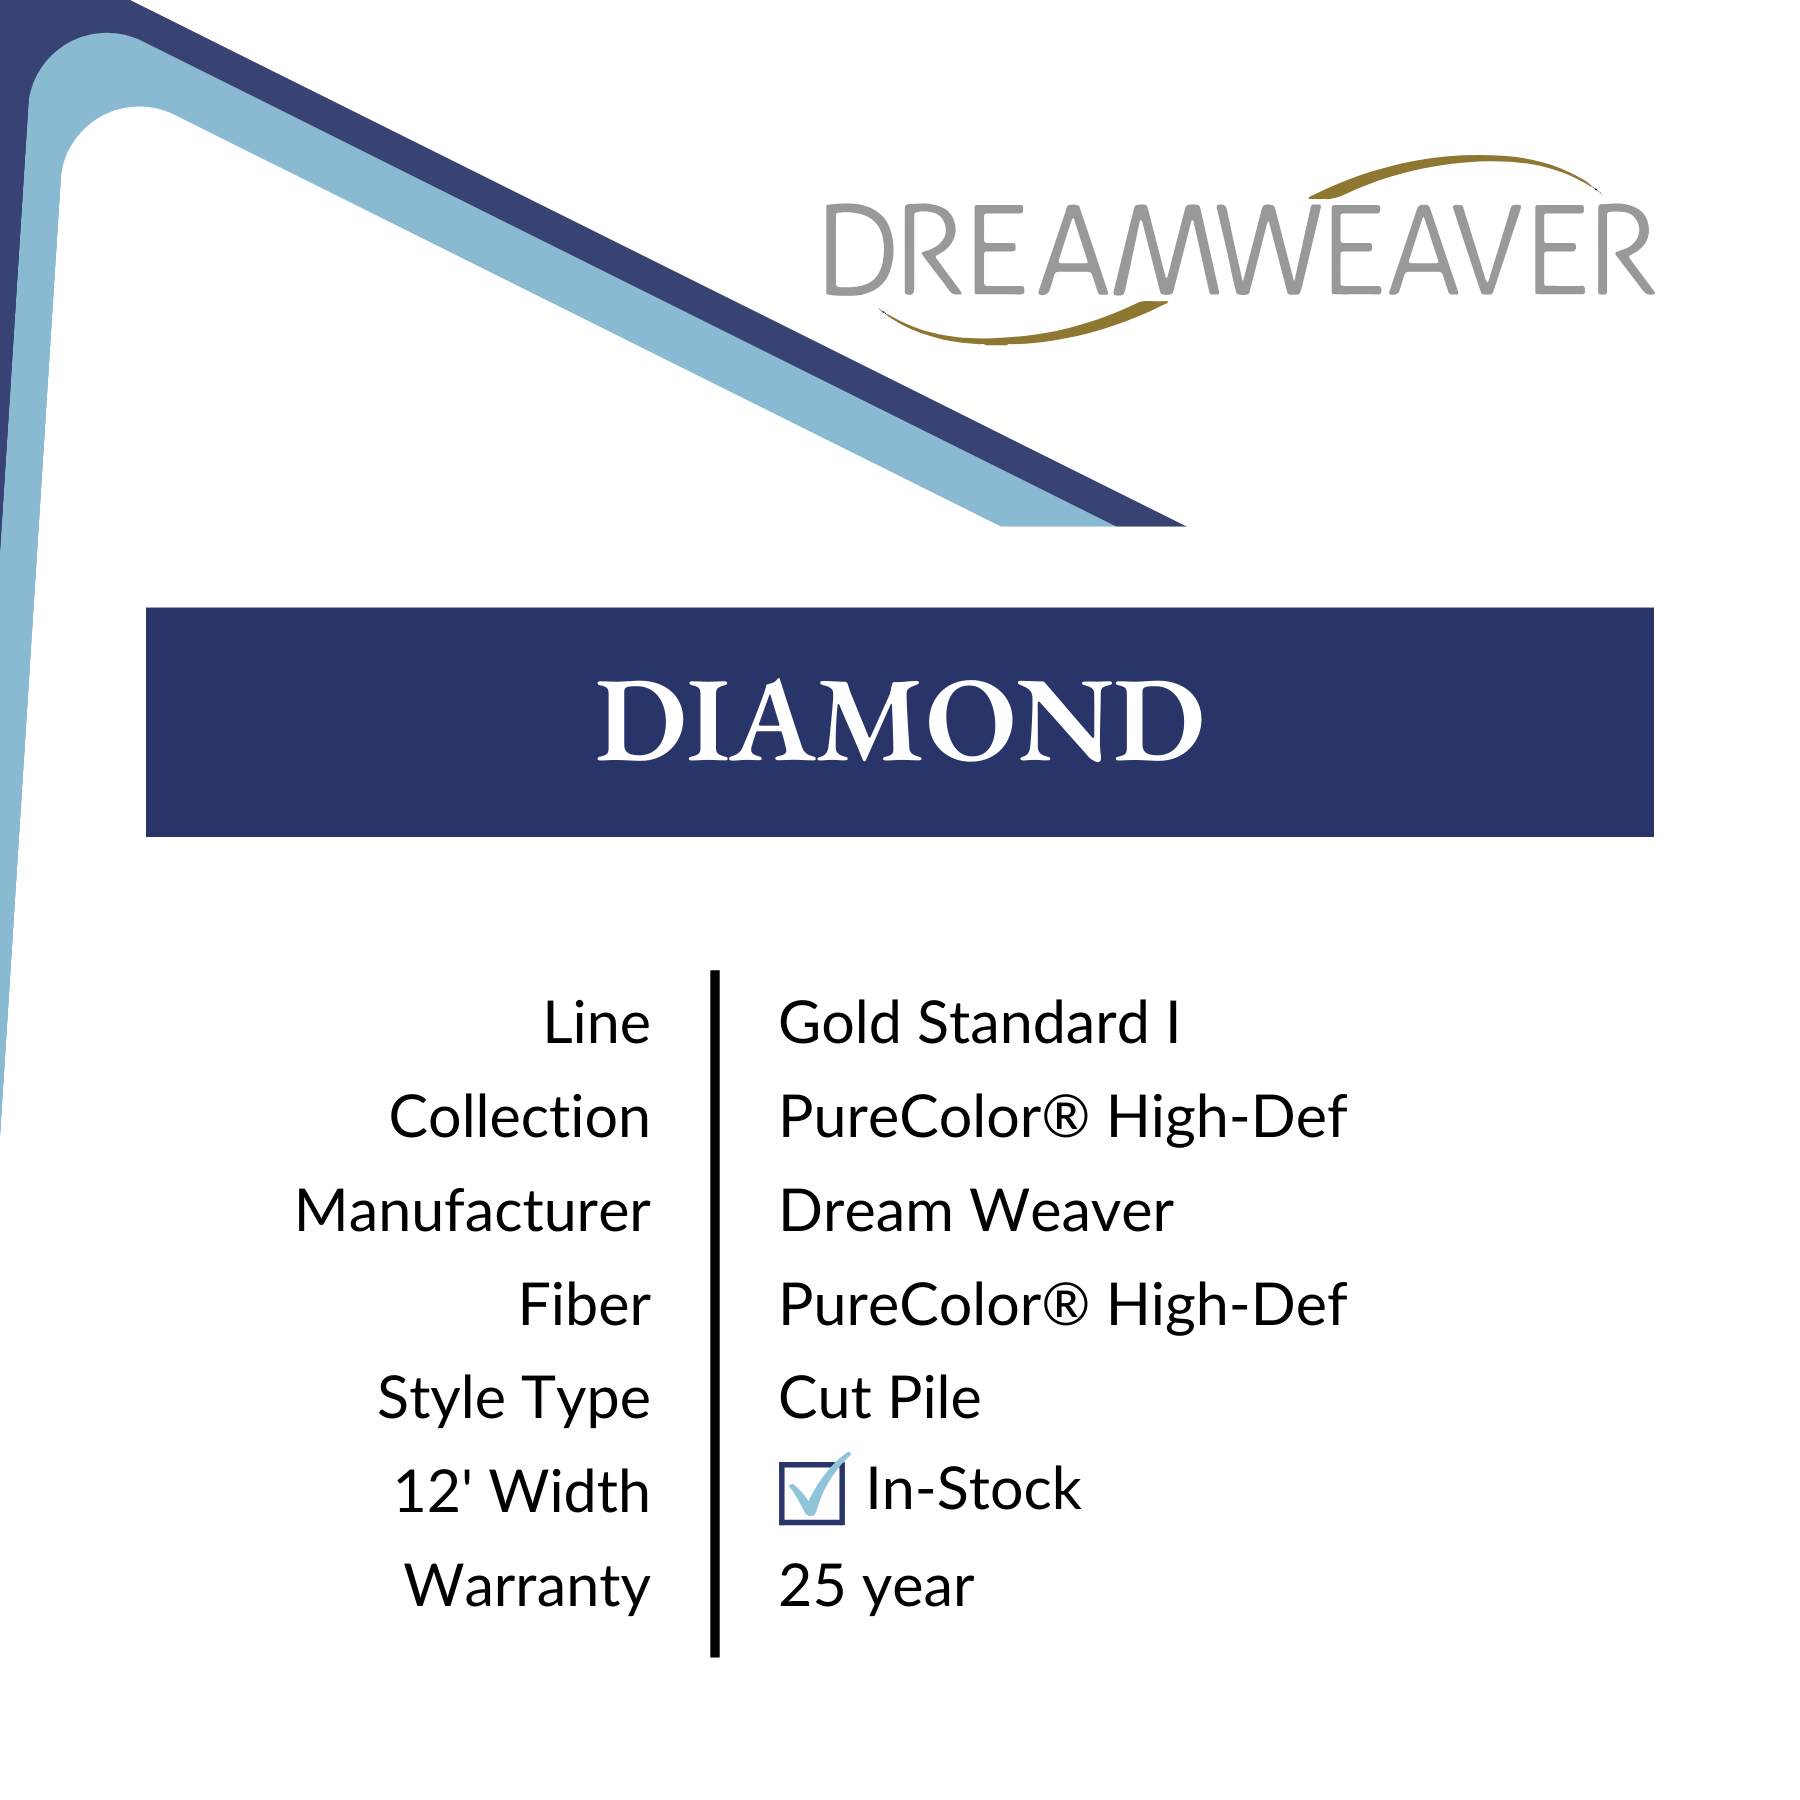 Diamond, Gold Standard I, Carpet by Dreamweaver, Calhoun's Flooring Springfield, IL Specs